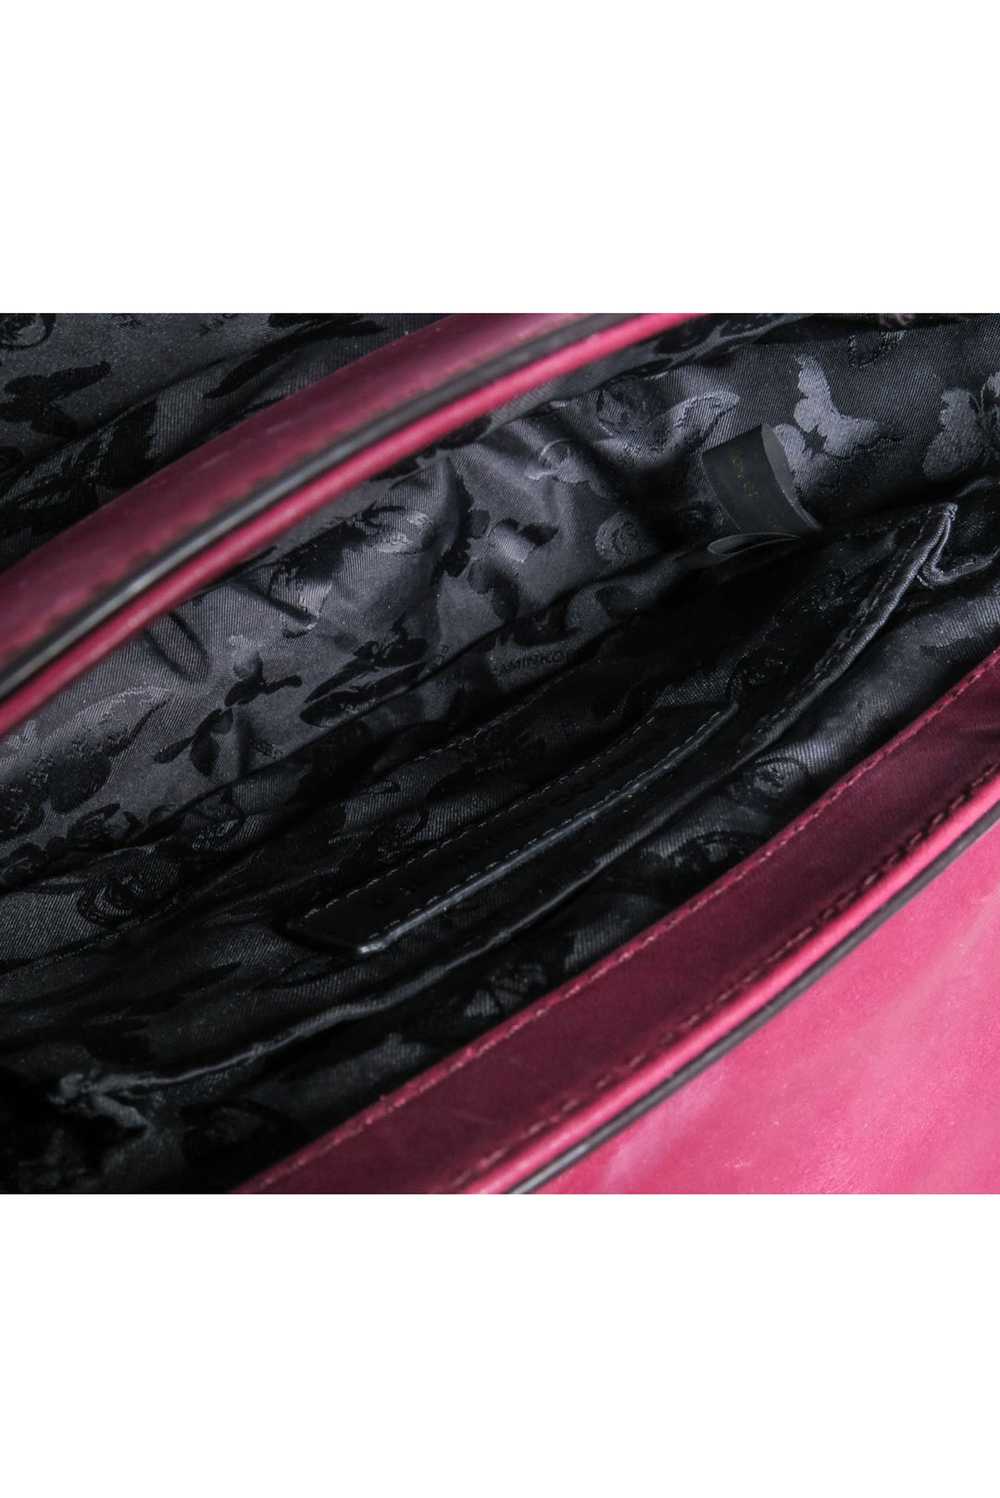 Rebecca Minkoff - Burgundy "Astor" Leather Saddle… - image 5